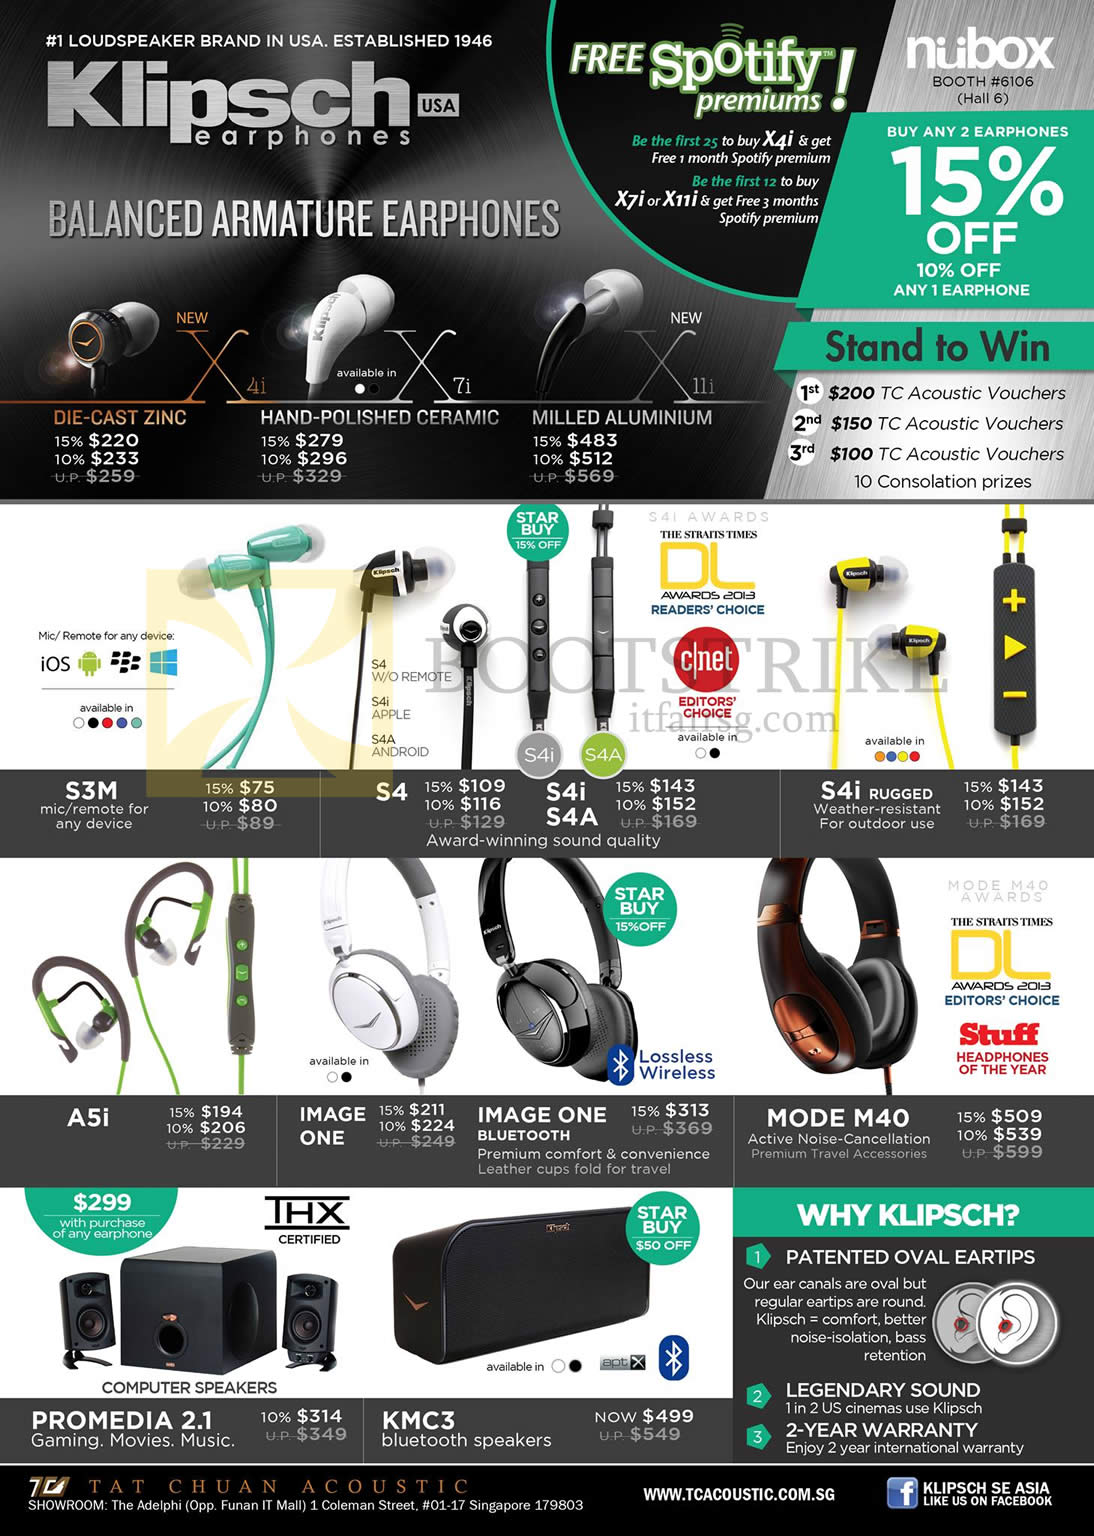 COMEX 2013 price list image brochure of Nubox Klipsch Earphones X4i, X7i, 11i, S3M, S4, S4i, S4a, A5i, Image One, Mode M40 Headphones, Promedia 2.1 Speakers, KMC3